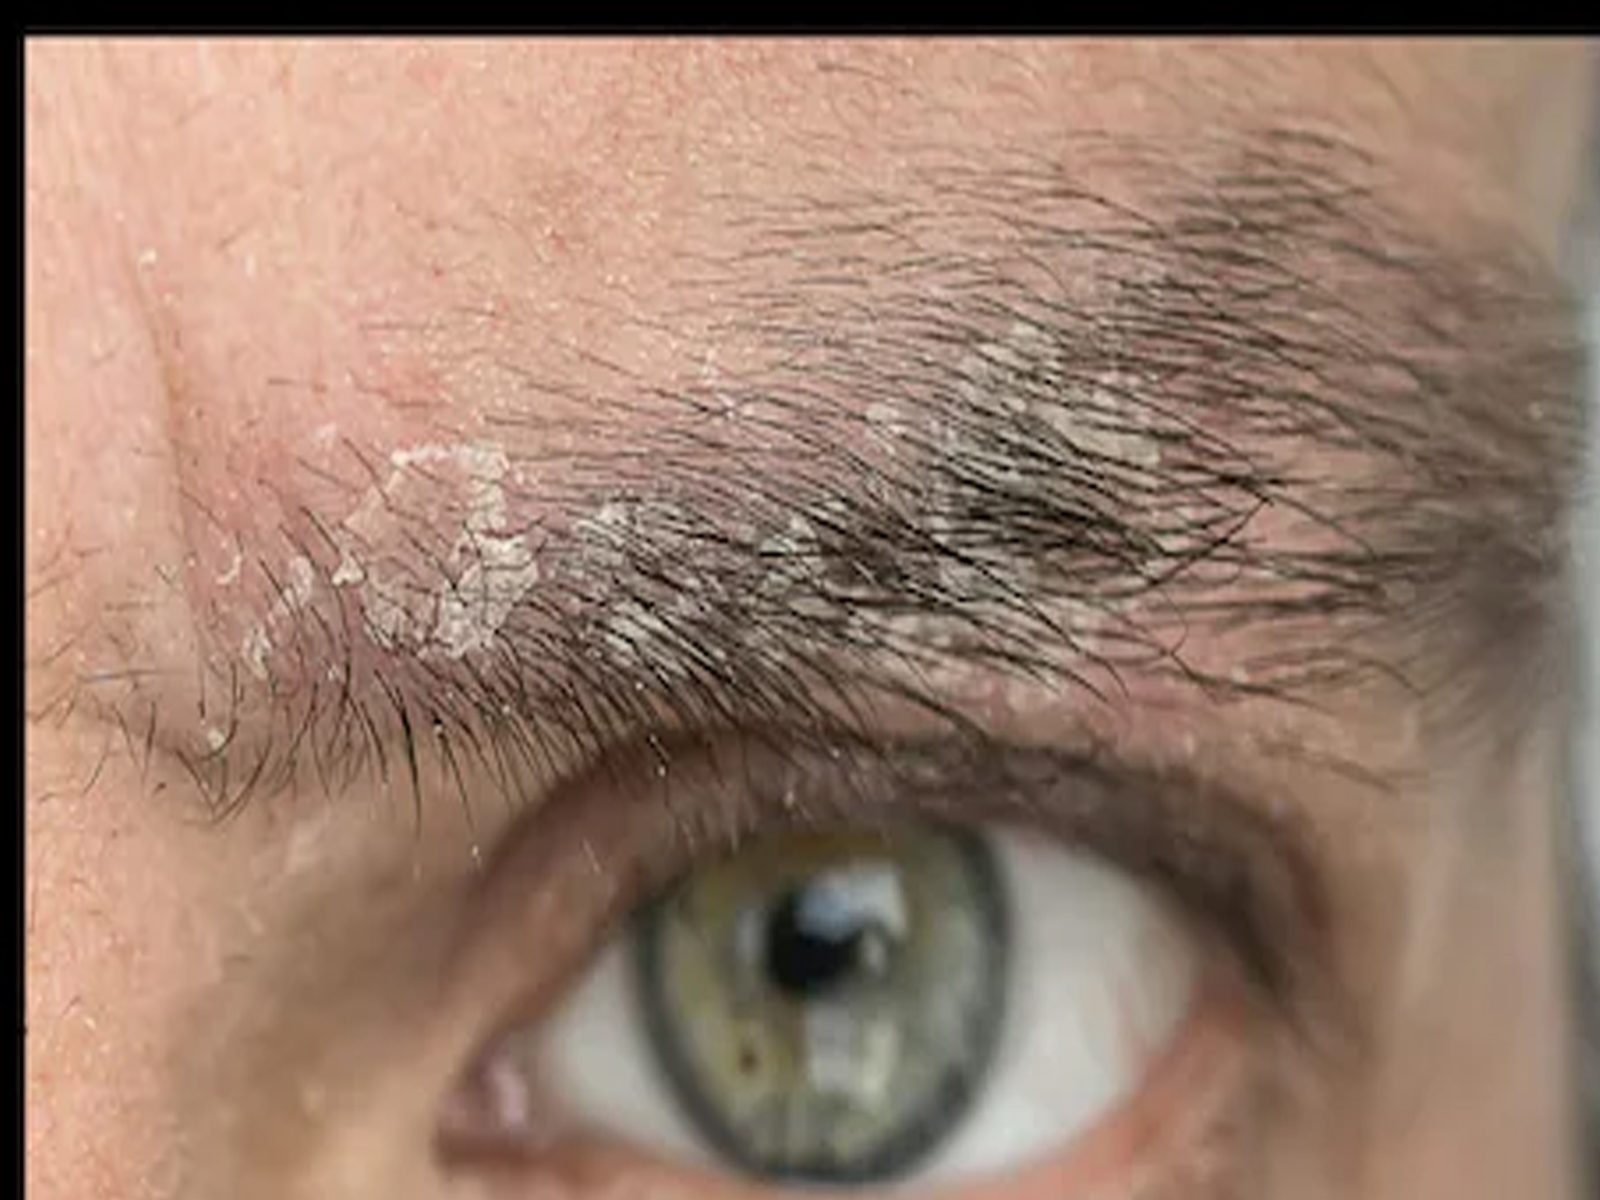 Eyebrow Dandruff: ਆਈਬ੍ਰੋ ਉੱਤੇ ਵੀ ਆਉਂਦਾ ਹੈ ਡੈਂਡਰਫ? ਕੀ ਇਹ ਕਿਸੀ ਬਿਮਾਰੀ ਦਾ ਸੰਕੇਤ ਤਾਂ ਨਹੀਂ